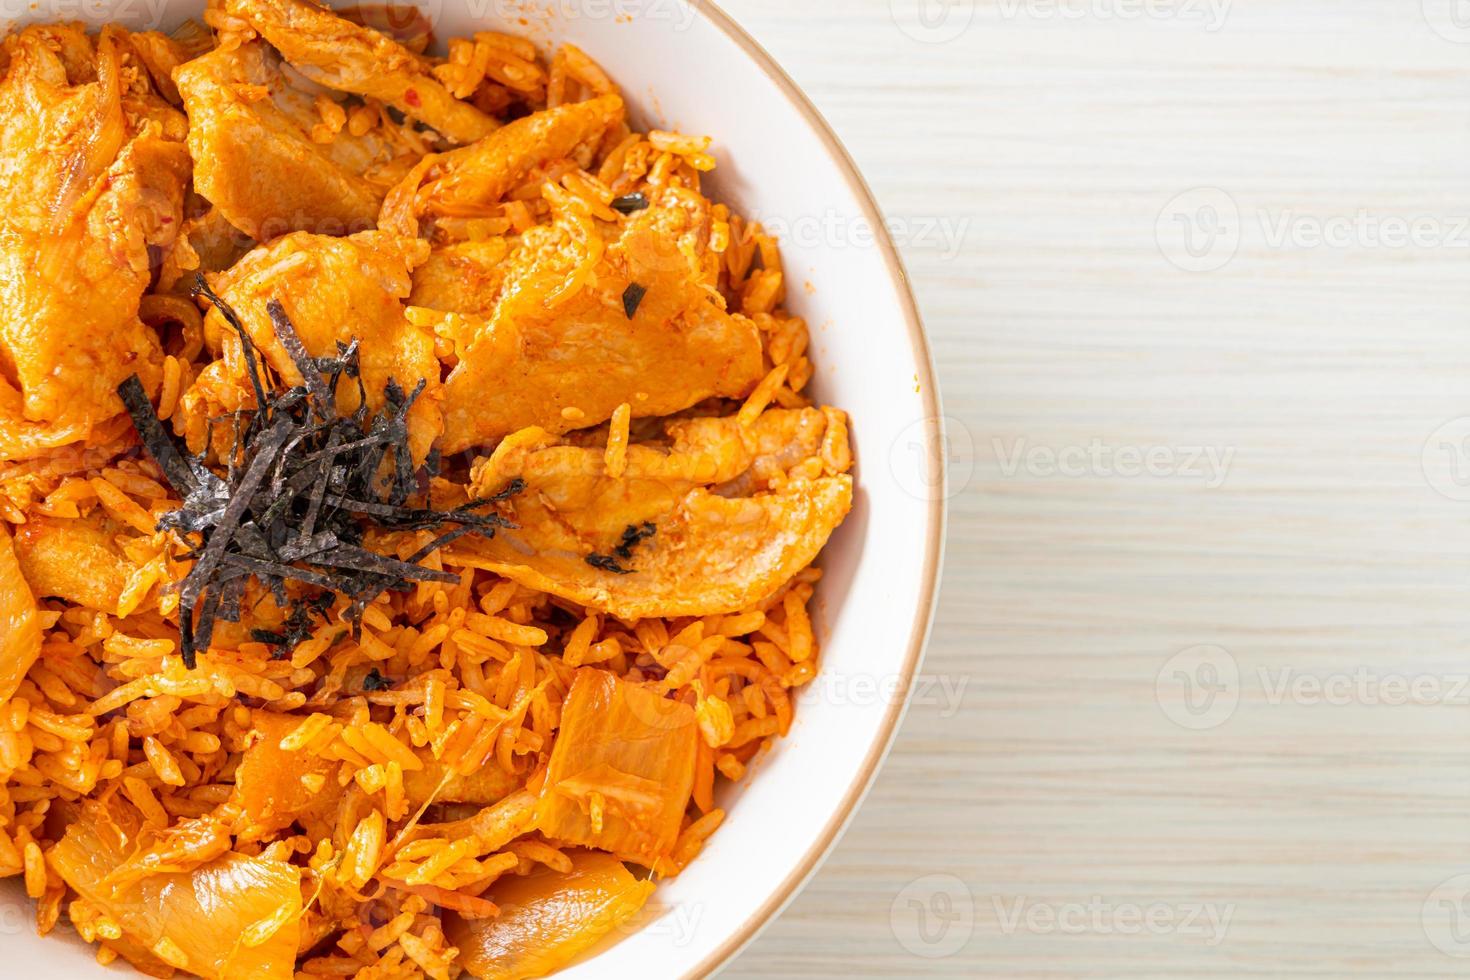 kimchi fried rice with pork sliced photo